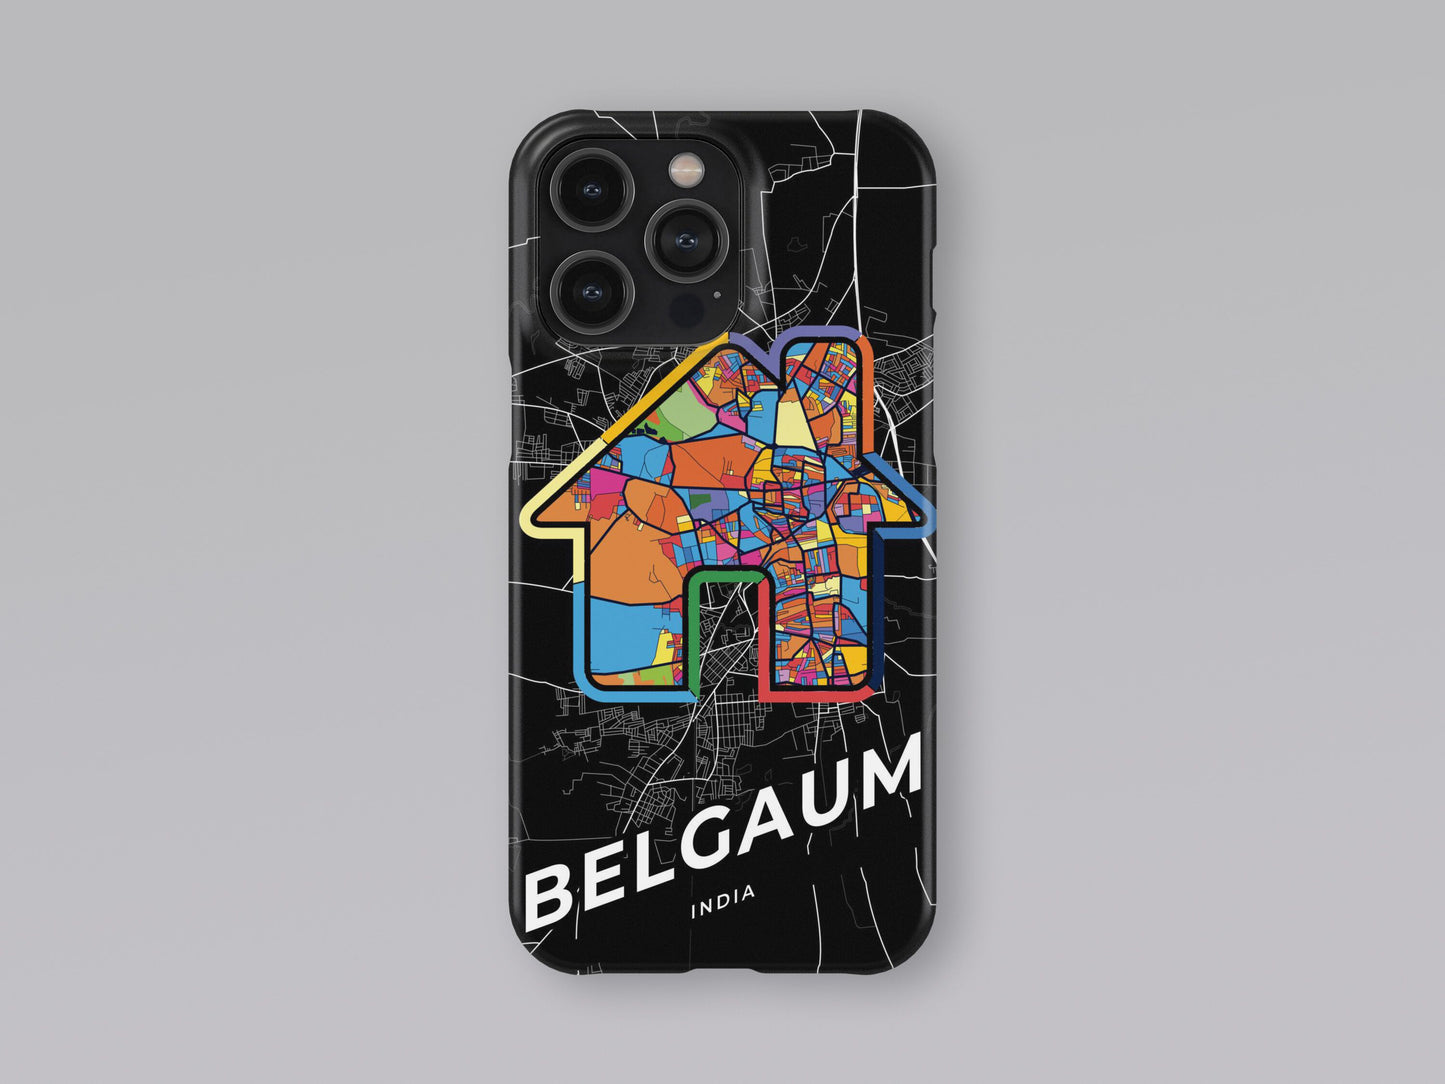 Belgaum India slim phone case with colorful icon. Birthday, wedding or housewarming gift. Couple match cases. 3